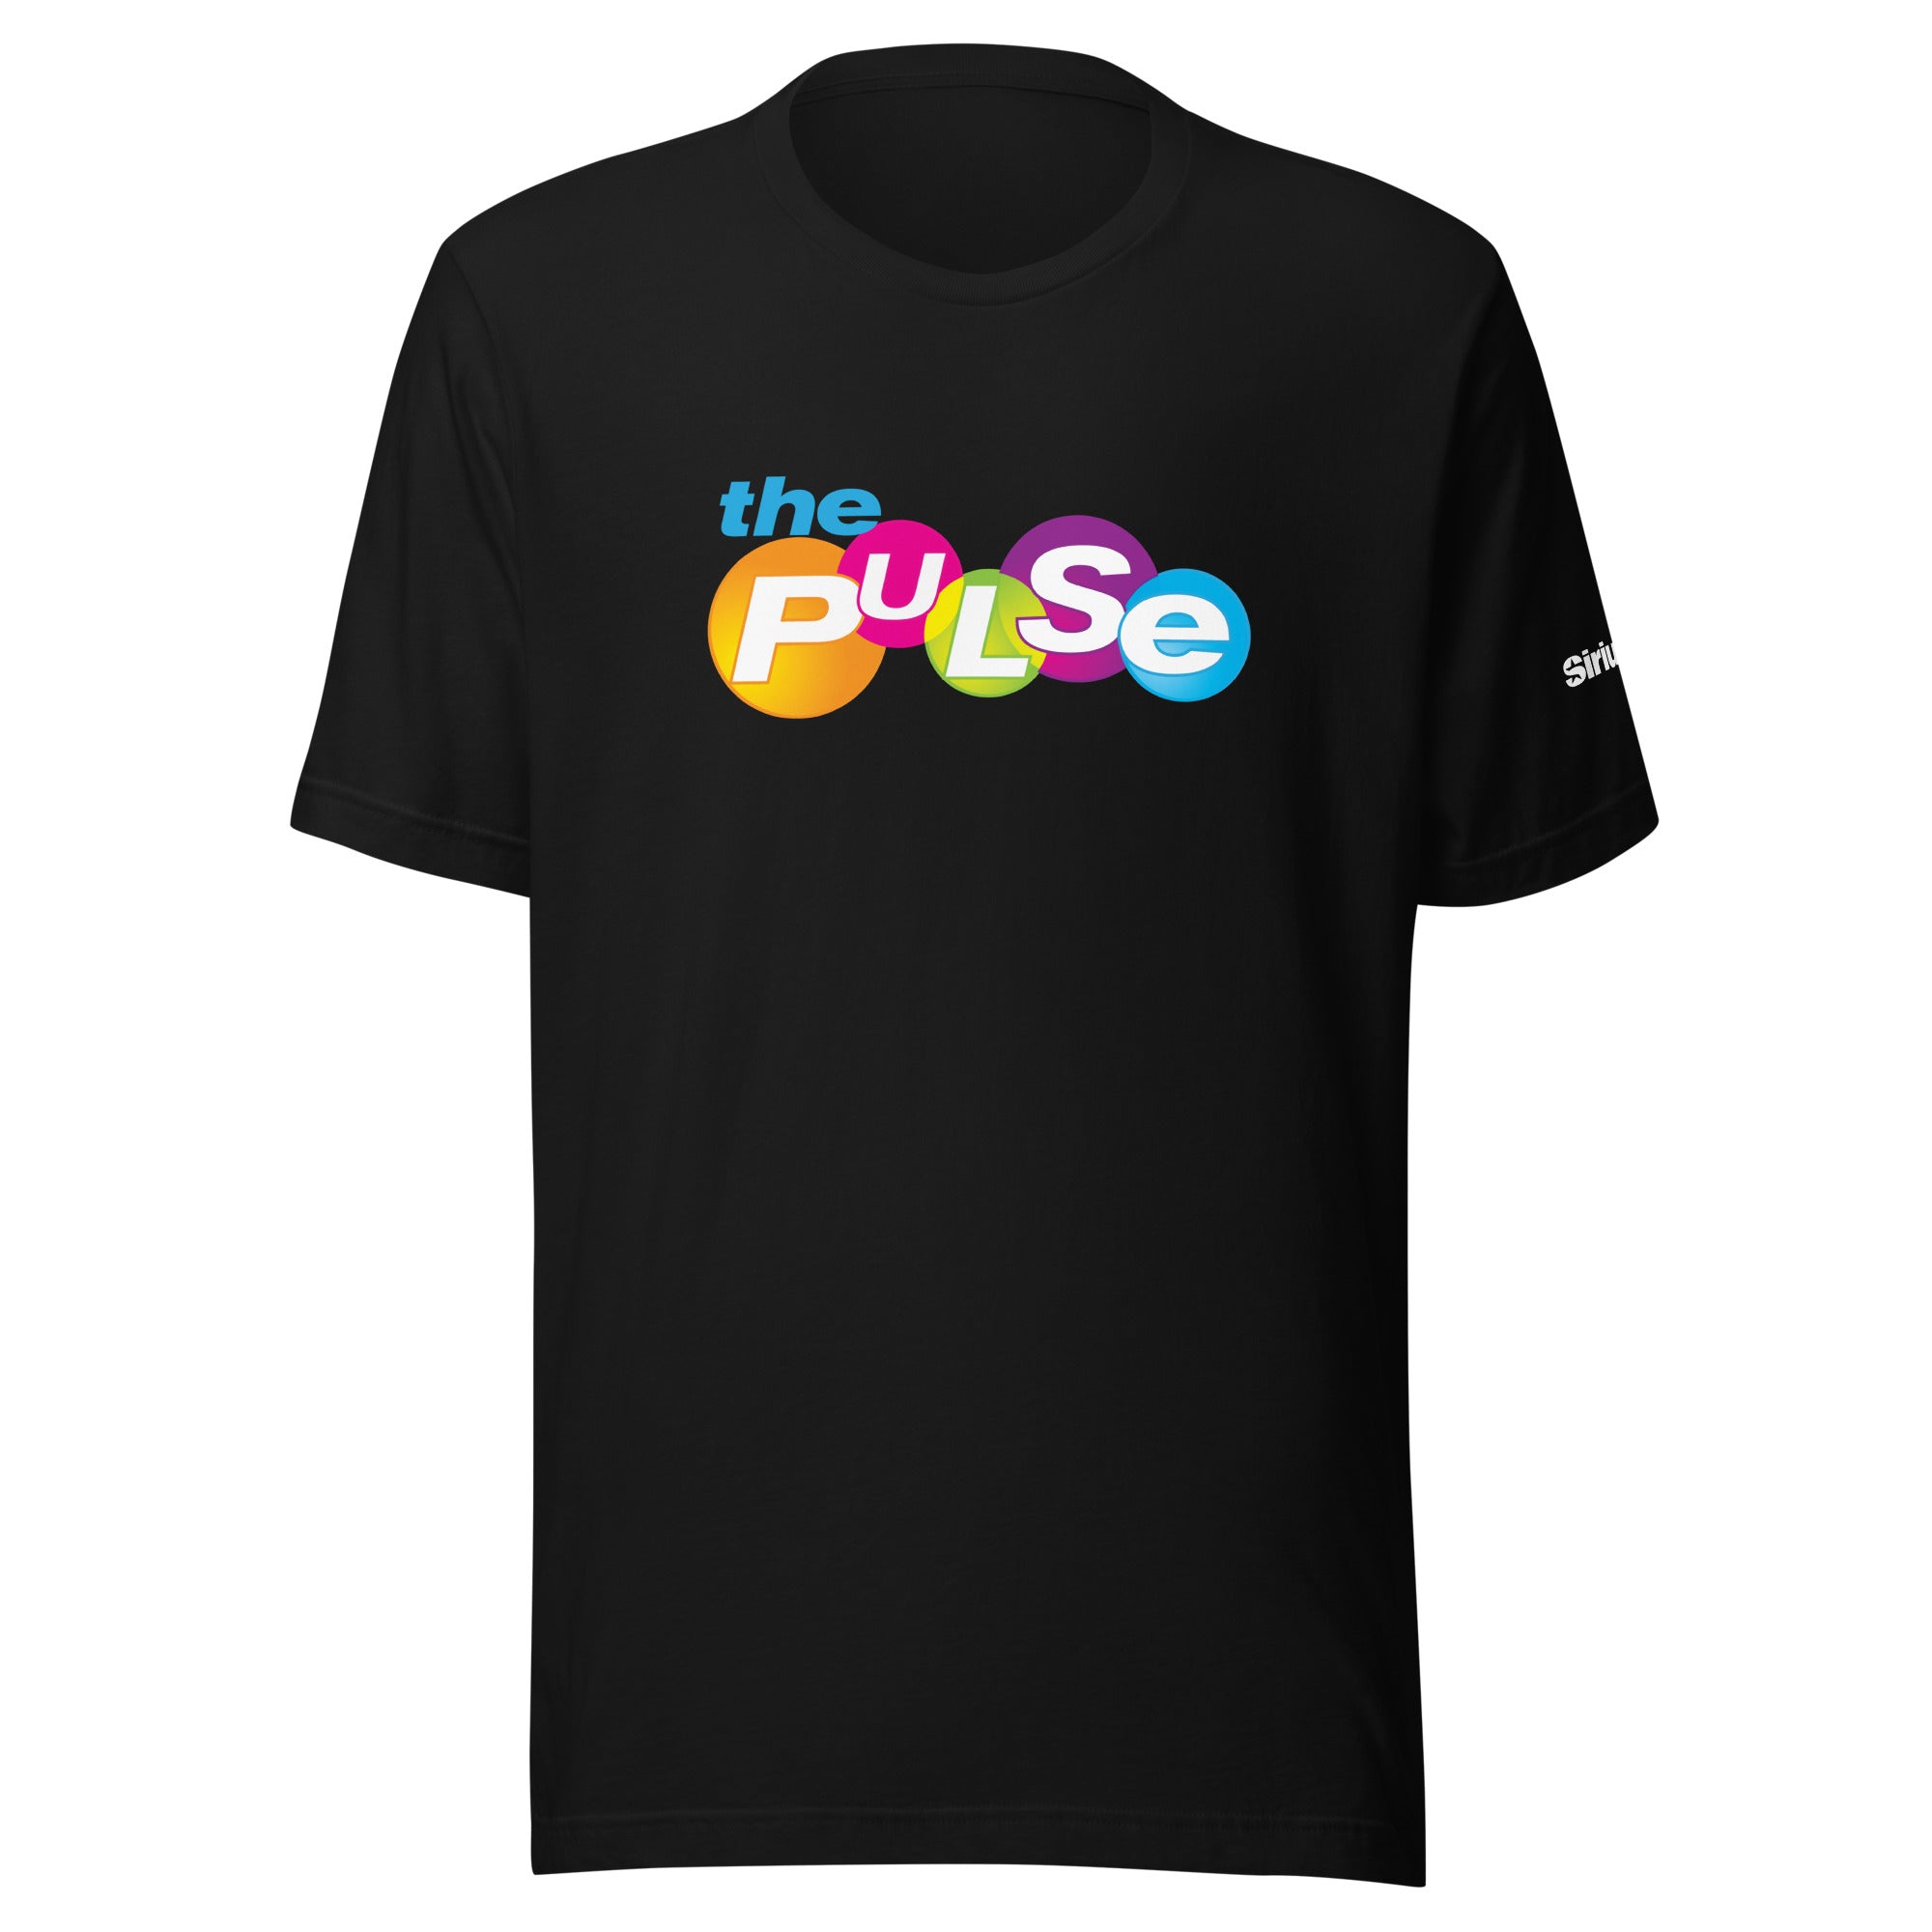 The Pulse: T-shirt (Black)